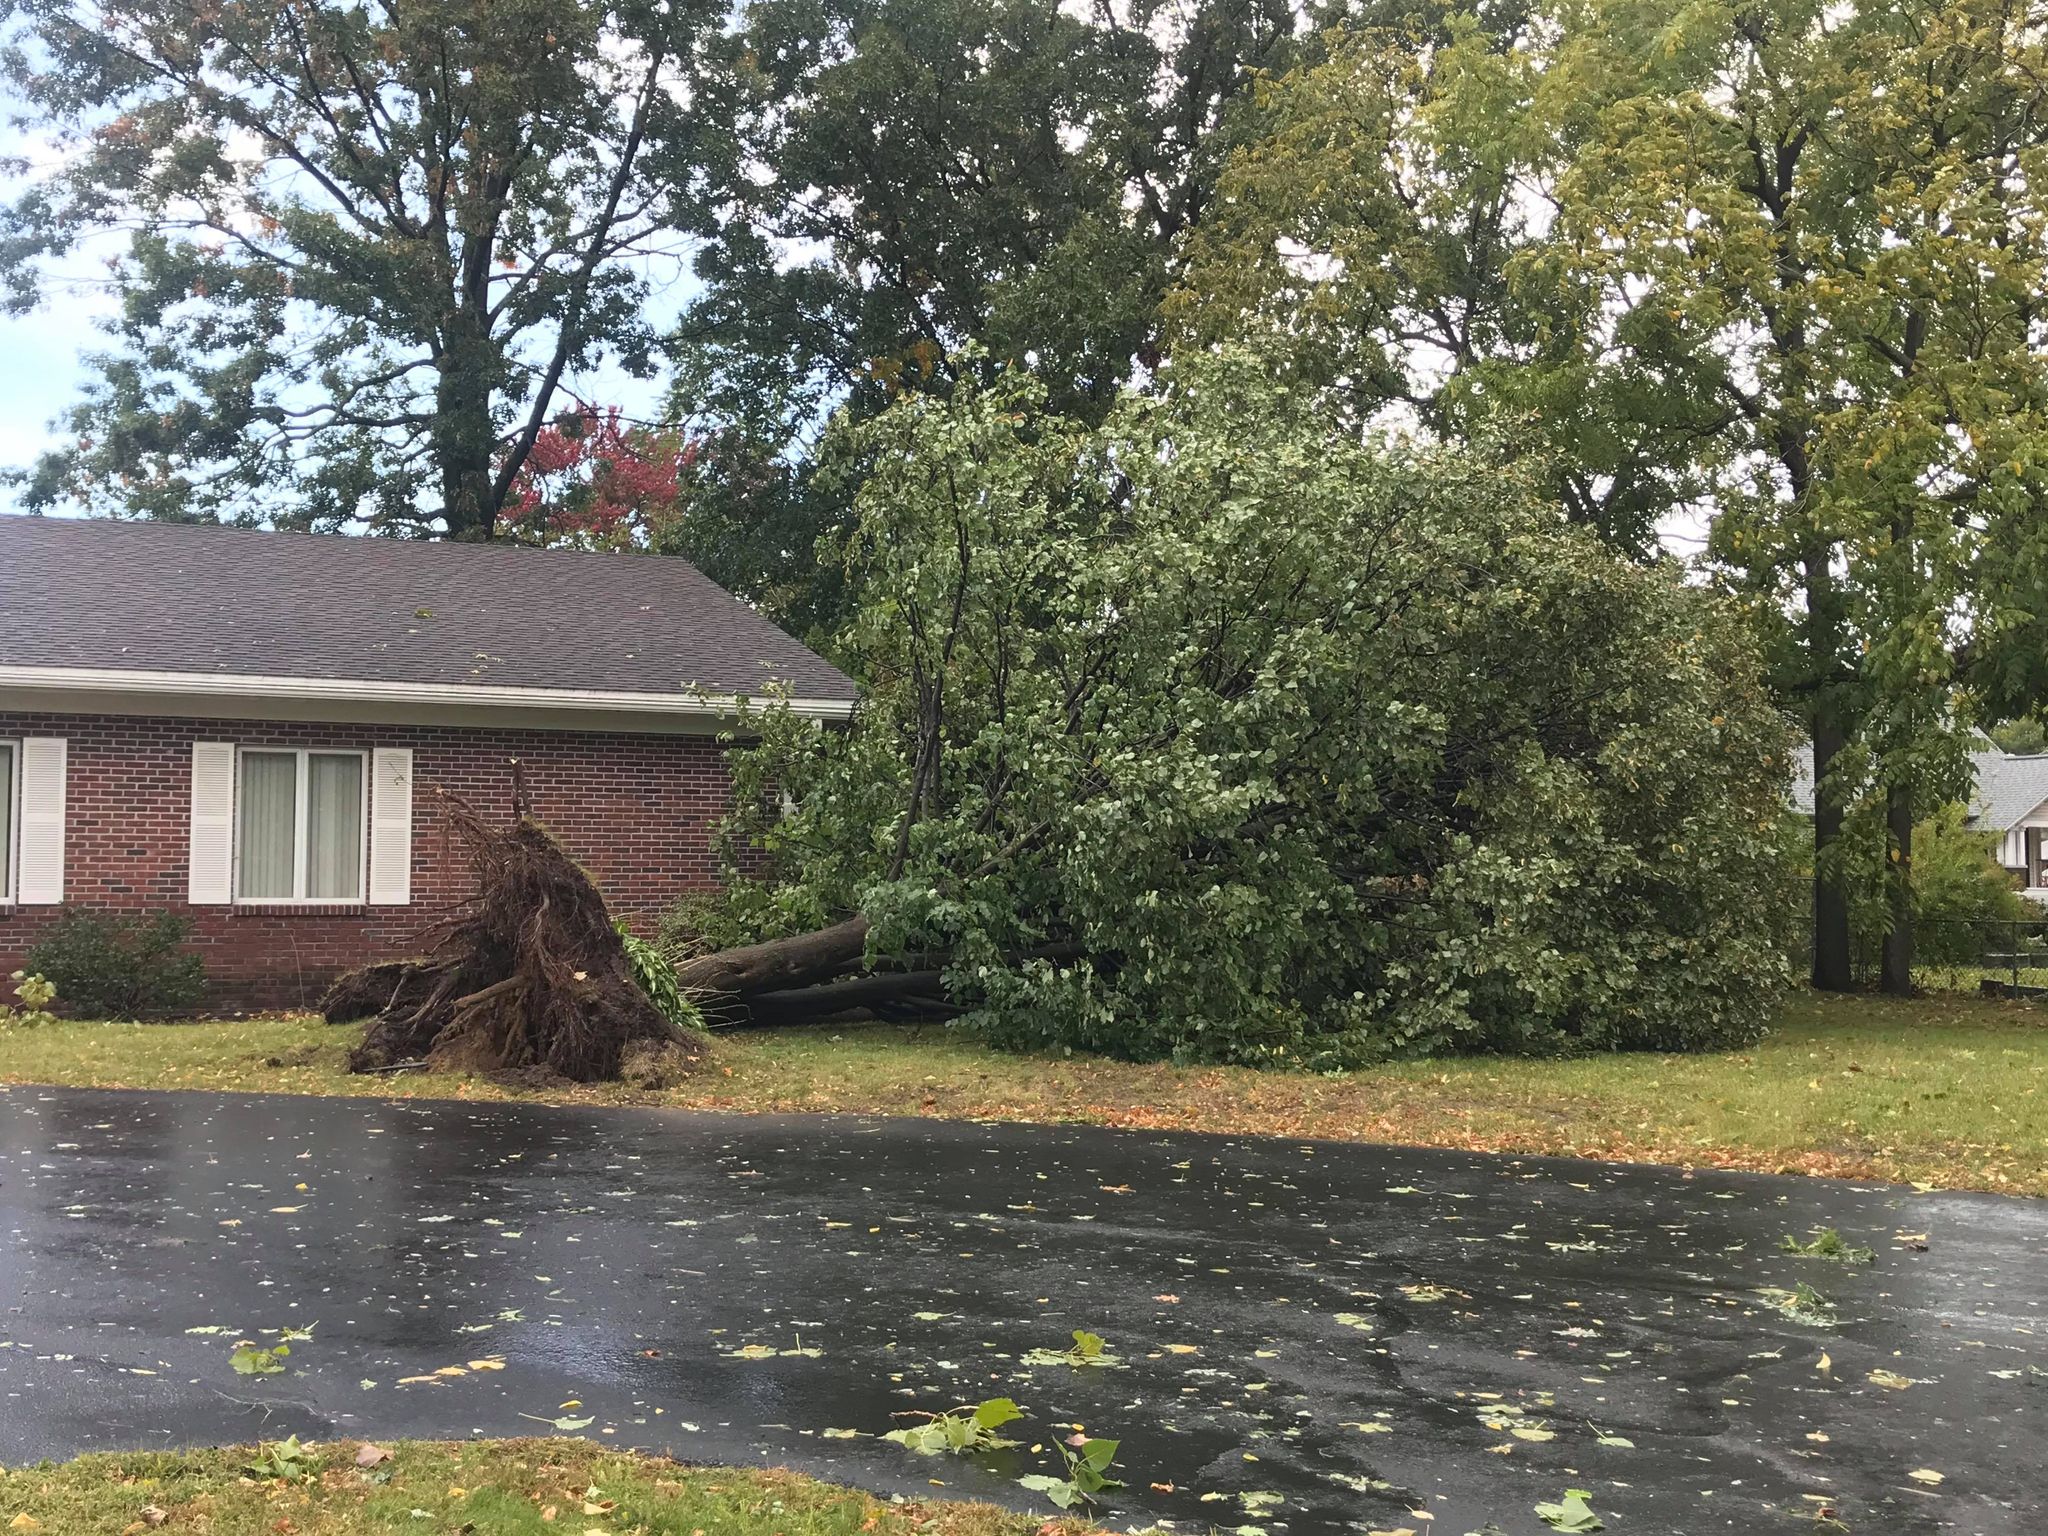 Tree damage in Schenectady - October 7, 2020